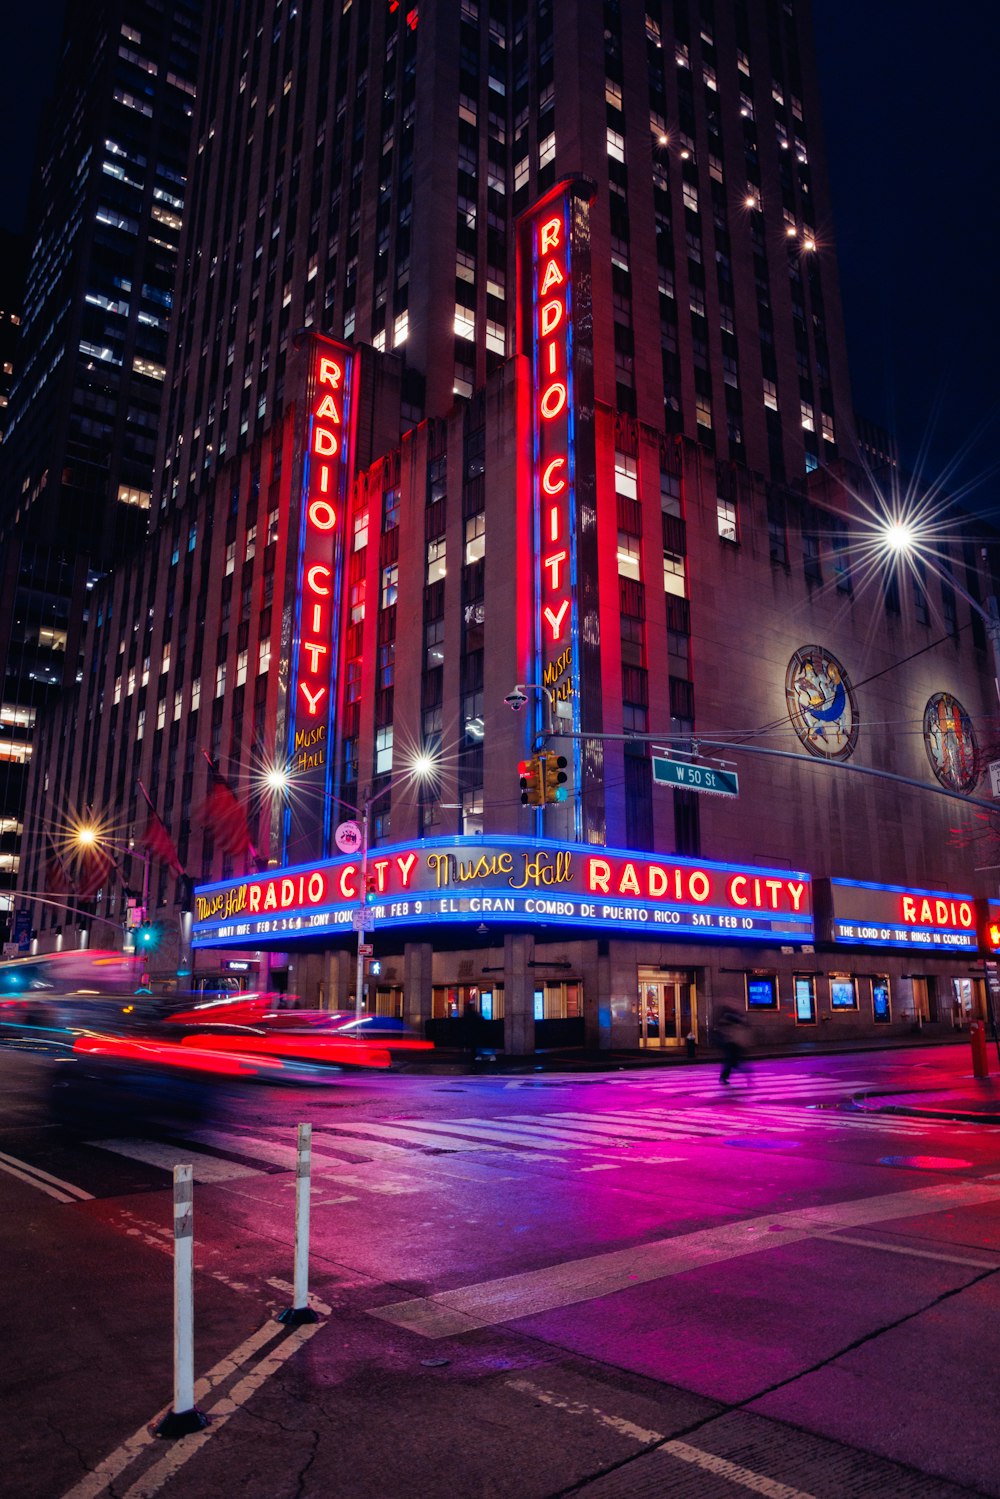 the radio city radio city building lit up at night